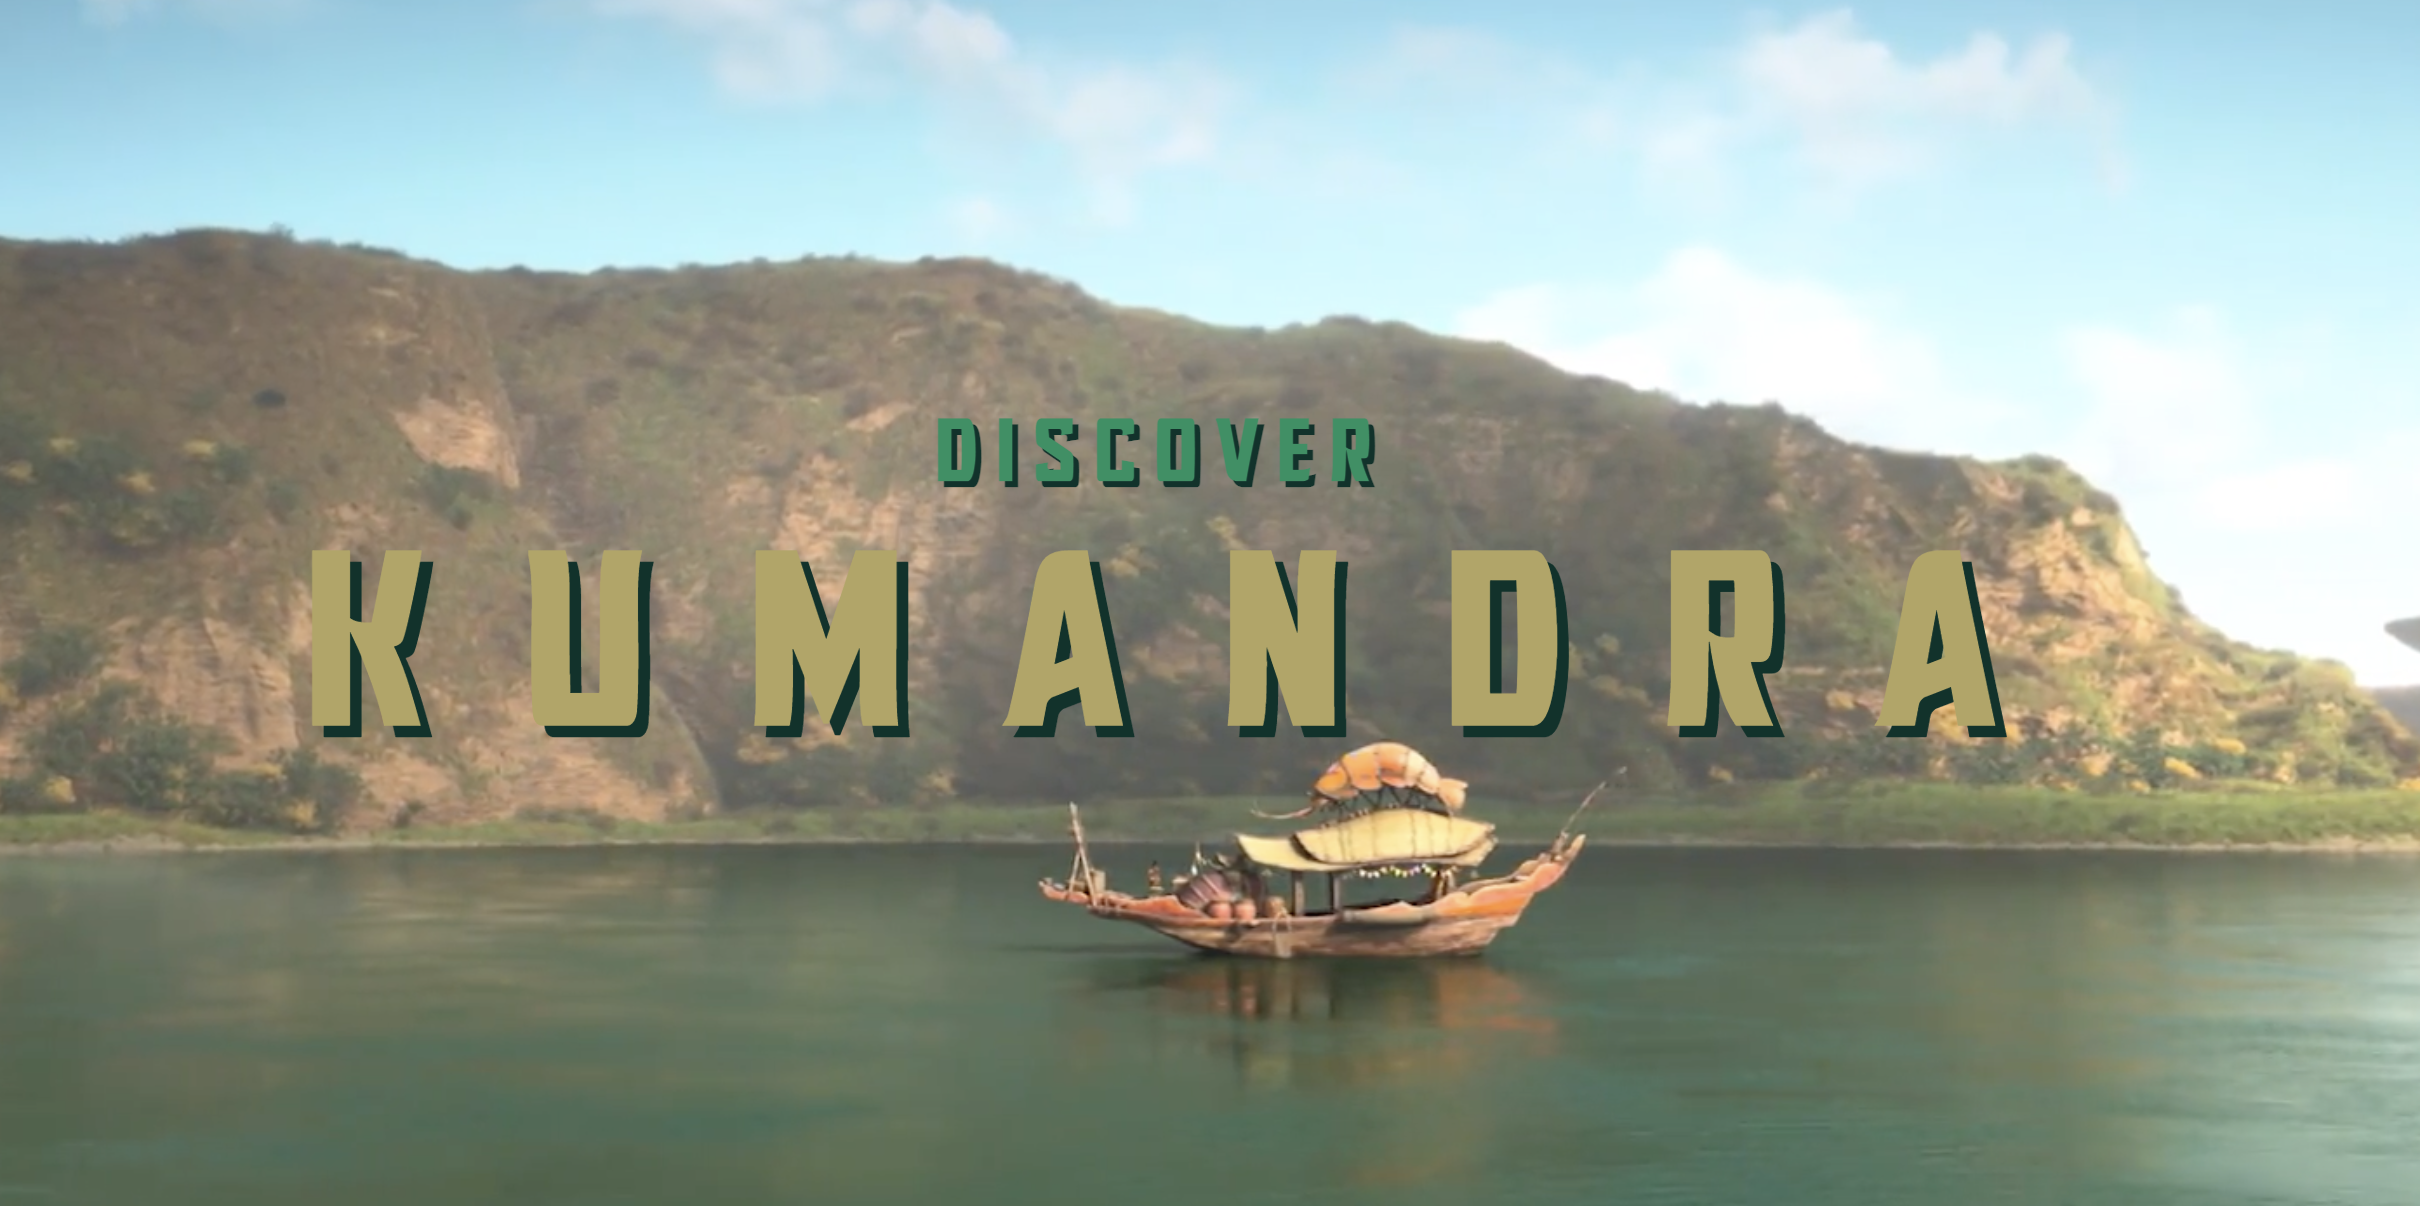 Disney's Raya and the Last Dragon Land of Kumandra Set - R Exclusive